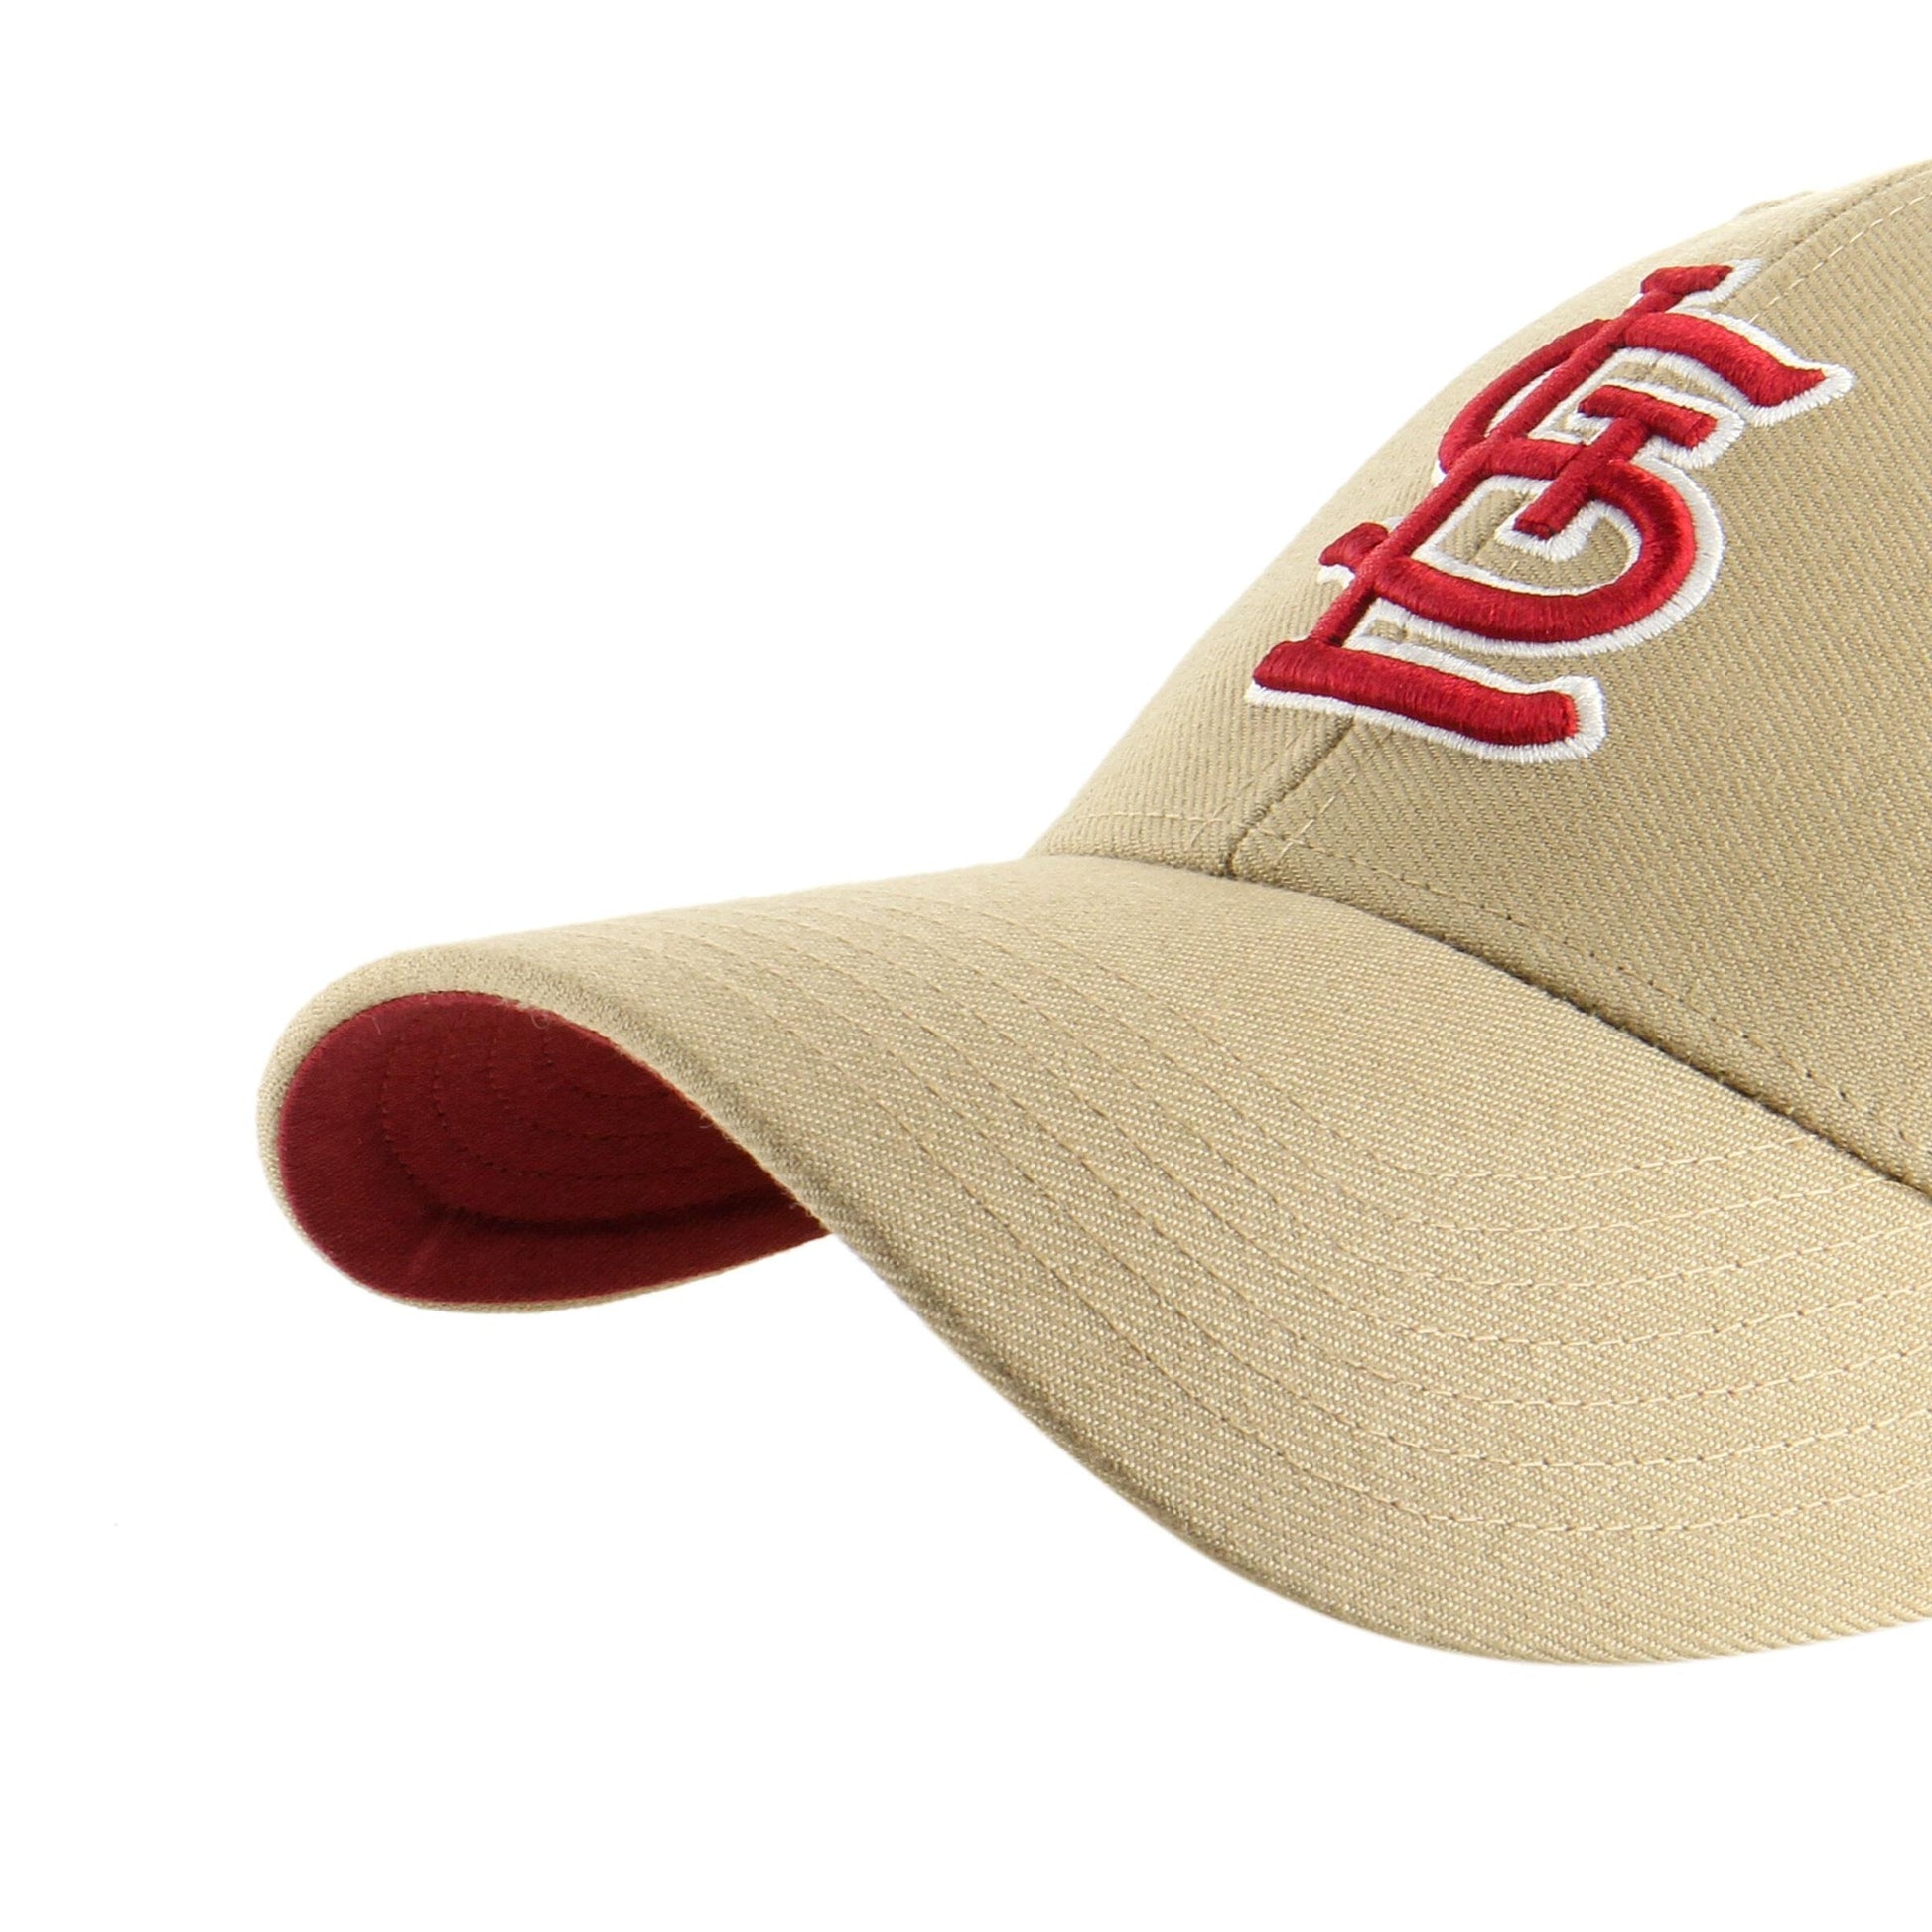 st. louis cardinals 47 brand hat